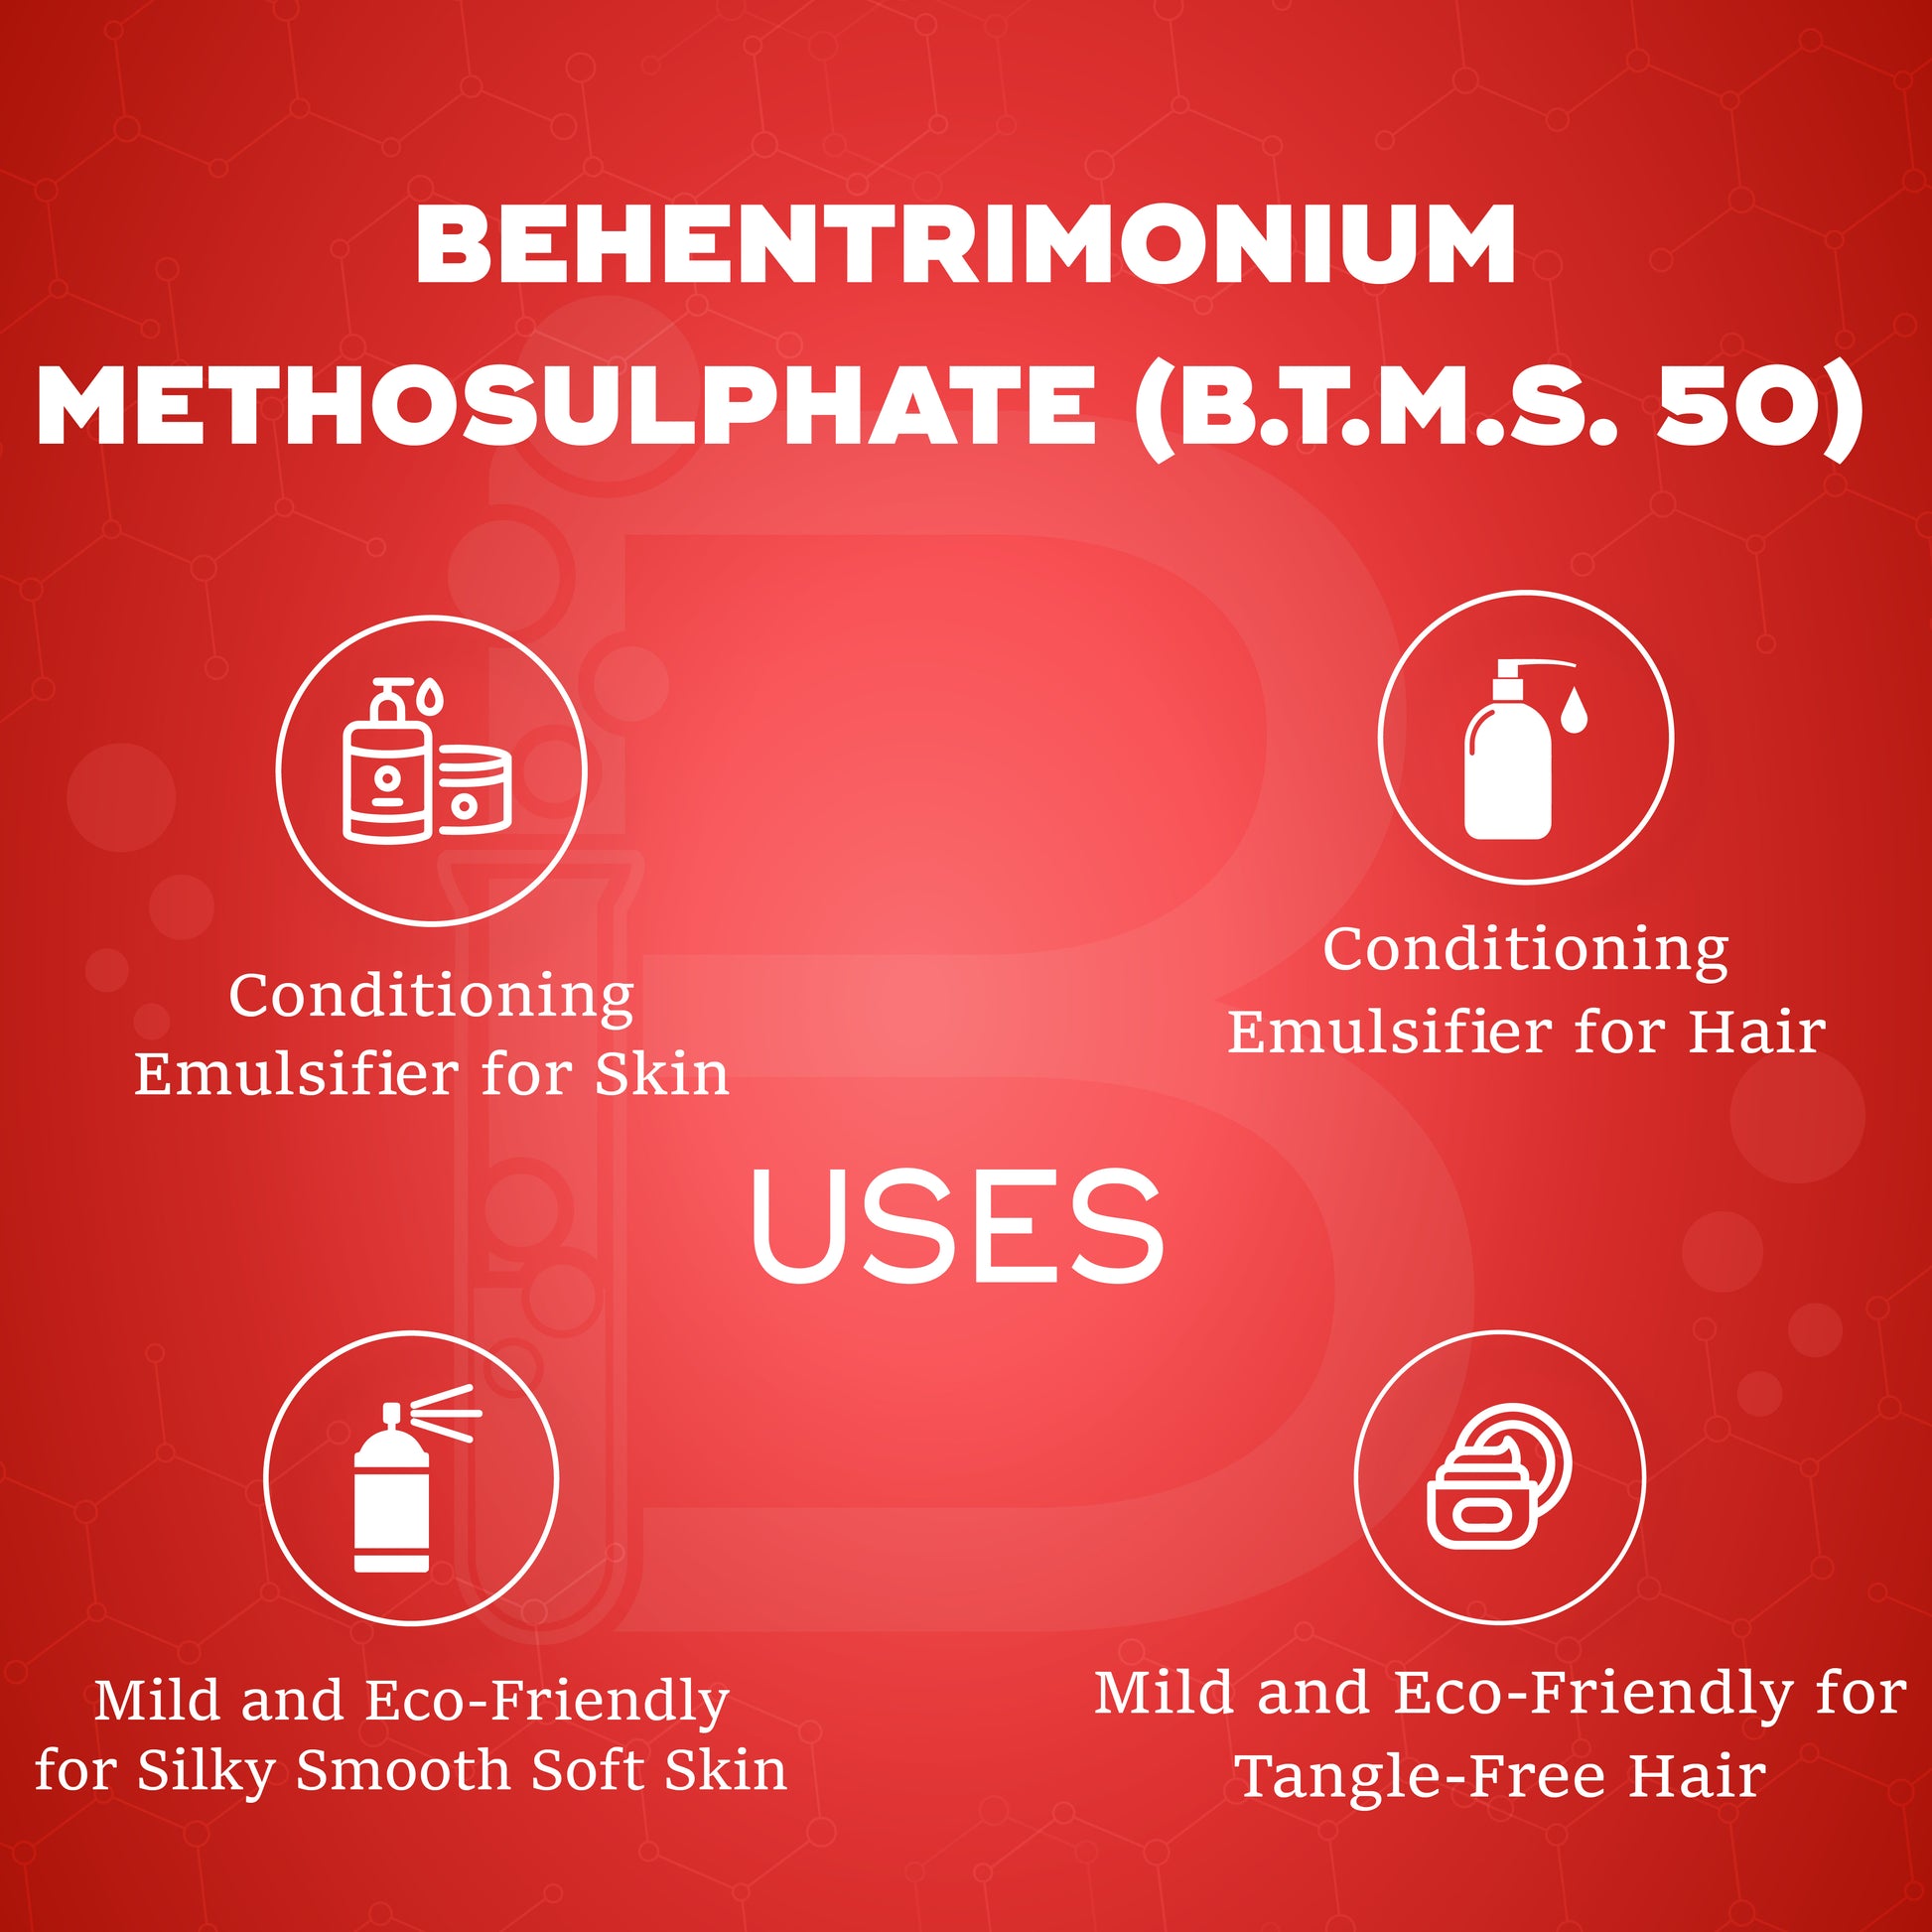 BTMS 50% Behentrimonium Methosulfate Cetearyl Alcohol Emulsifying